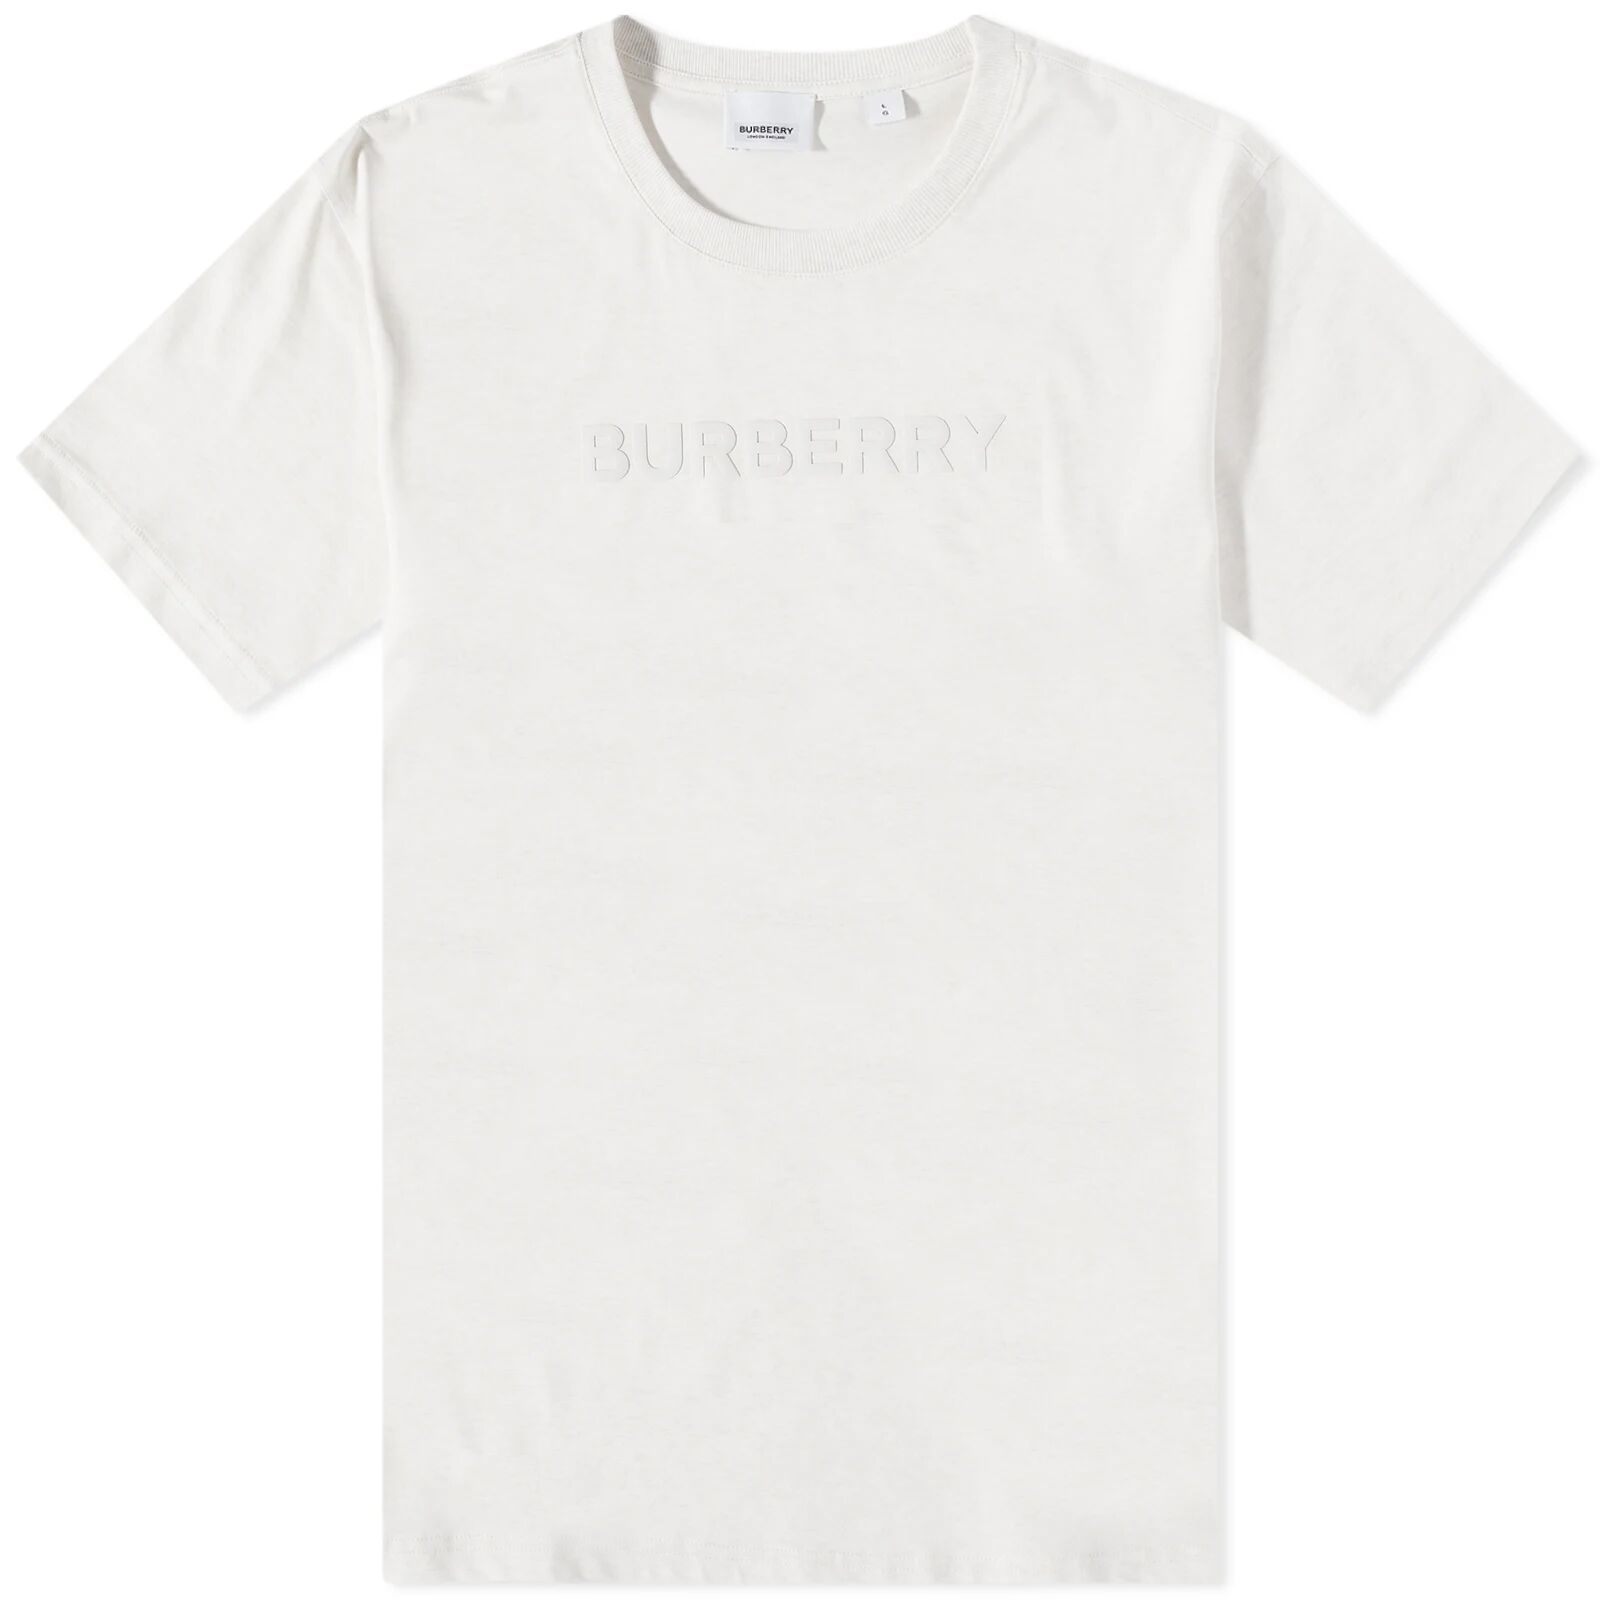 Burberry Men's Harriston Logo T-Shirt in Oatmeal Melange, Size Small